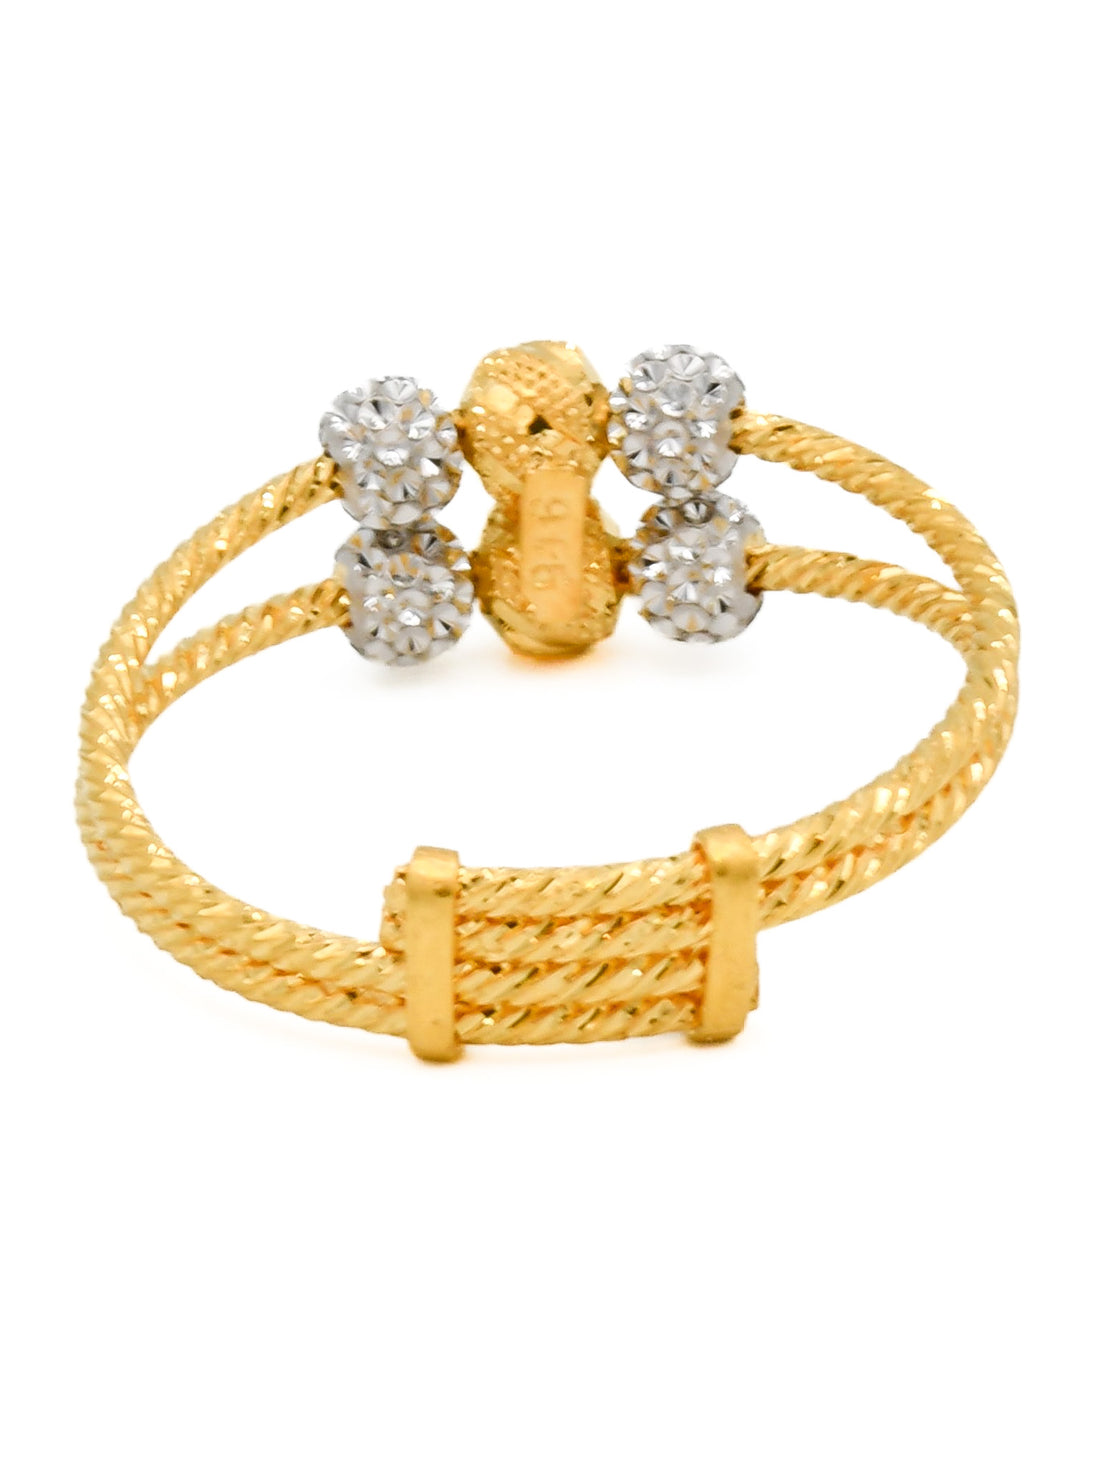 22ct Gold Two Tone Adjustable Ladies Ring - Roop Darshan